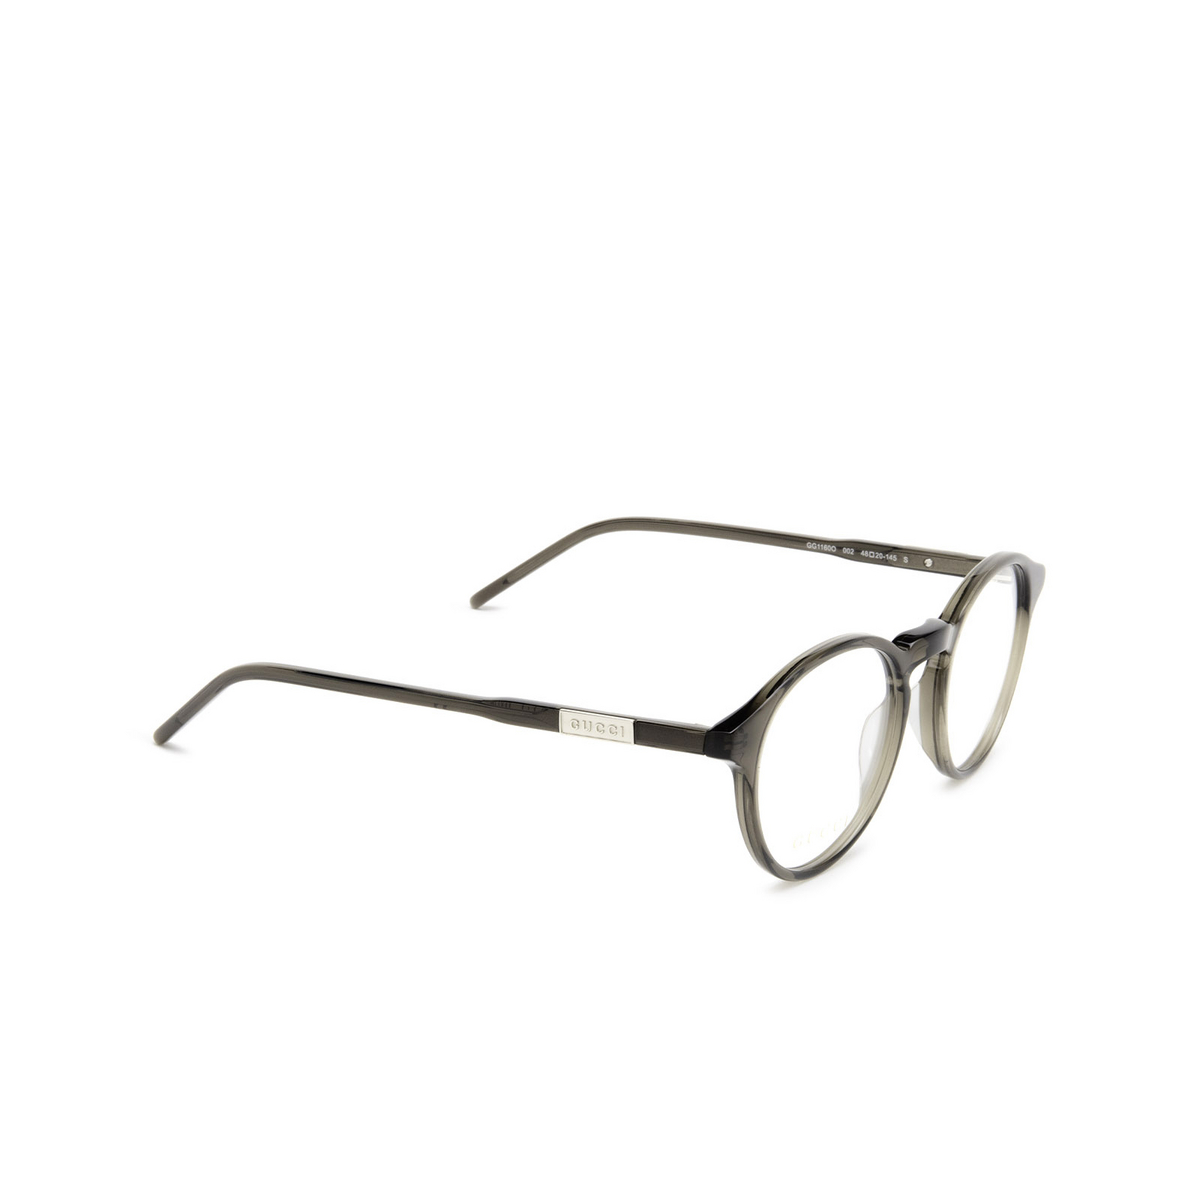 Gucci® Round Eyeglasses: GG1160O color Brown 002 - three-quarters view.